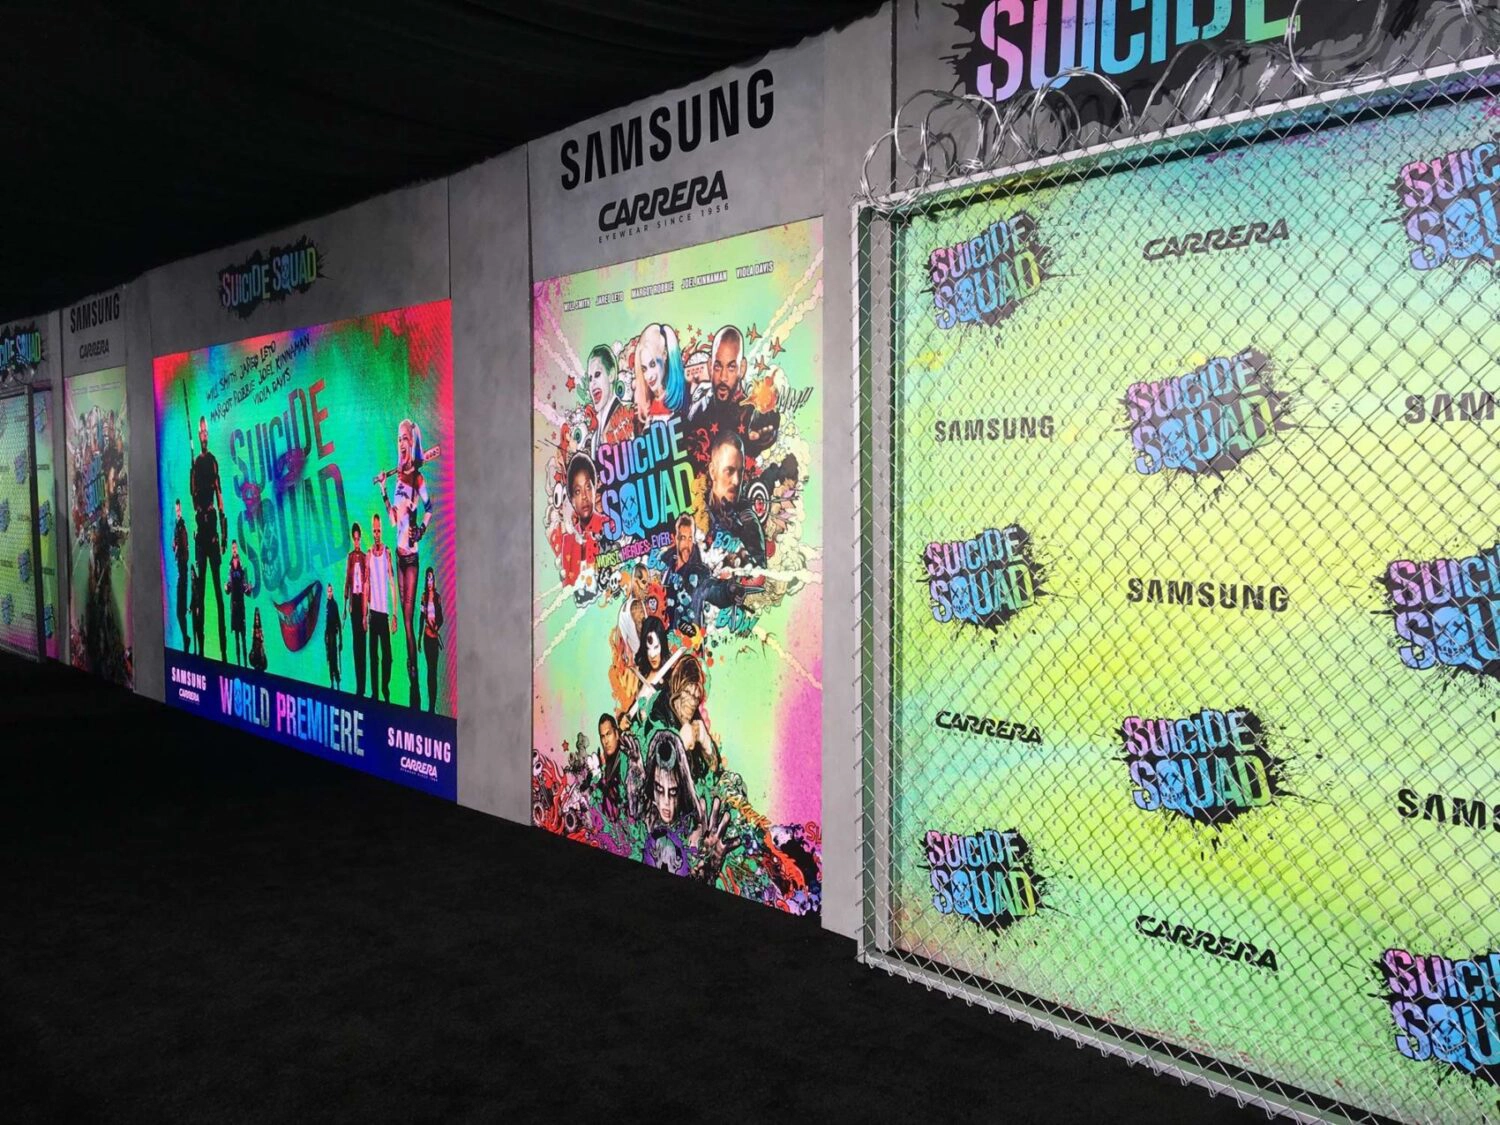 Suicide Squad red carpet premiere featuring LED